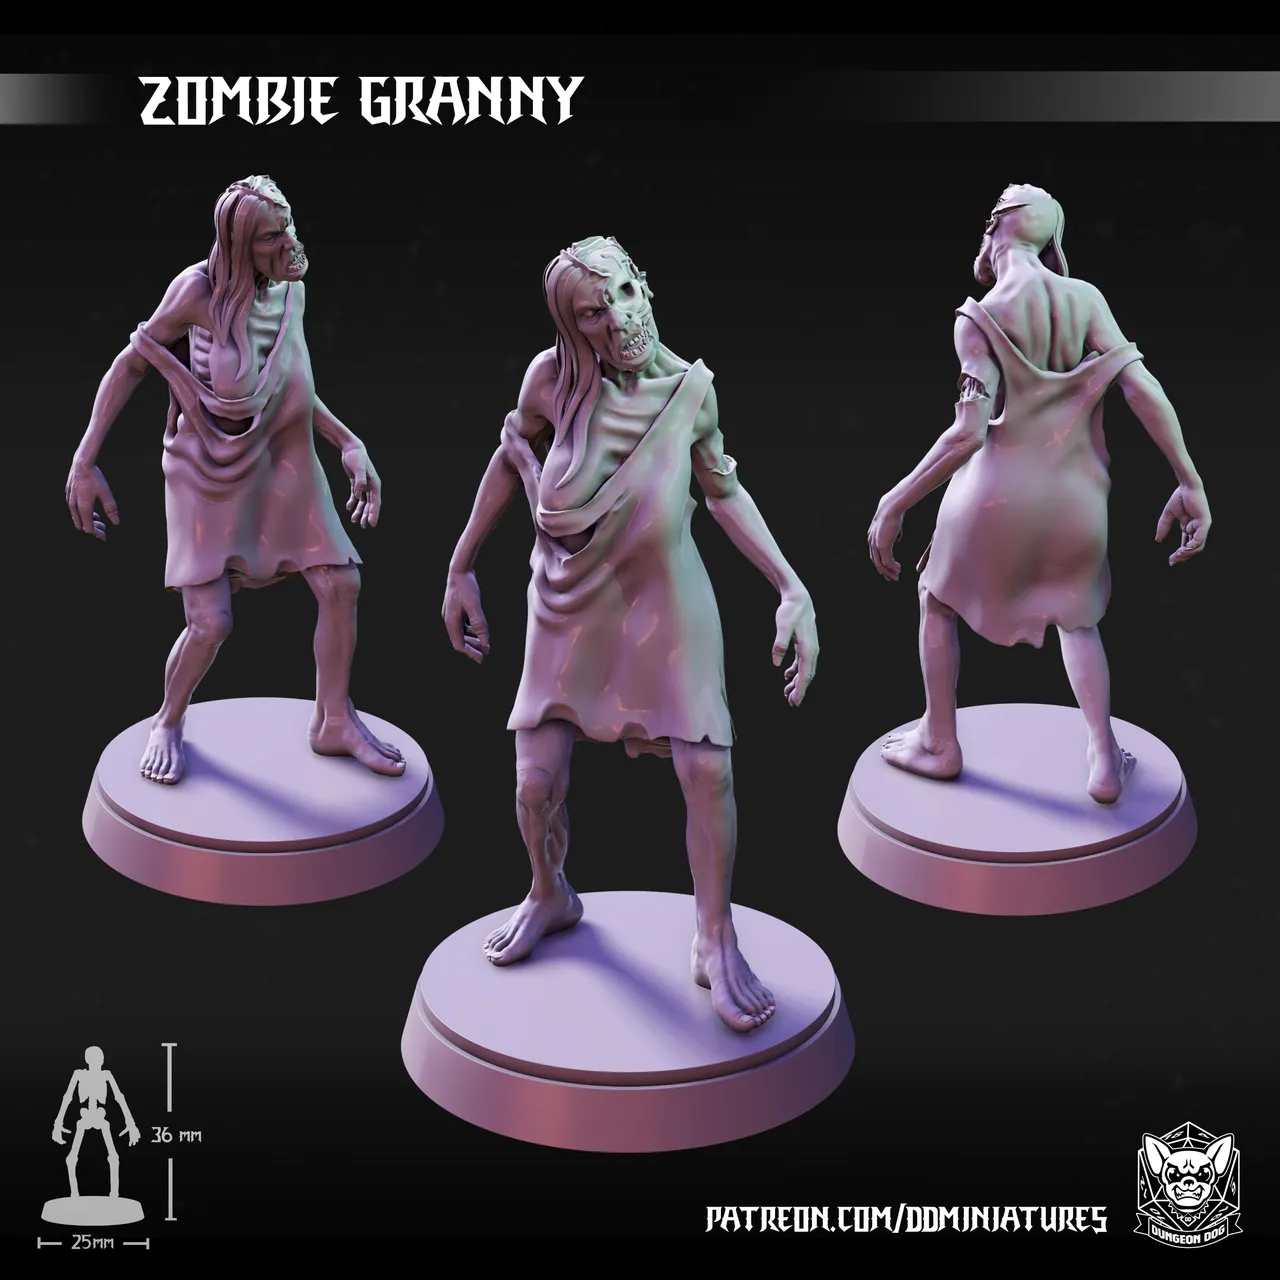 DD-zombie-granny-render-02.jpg